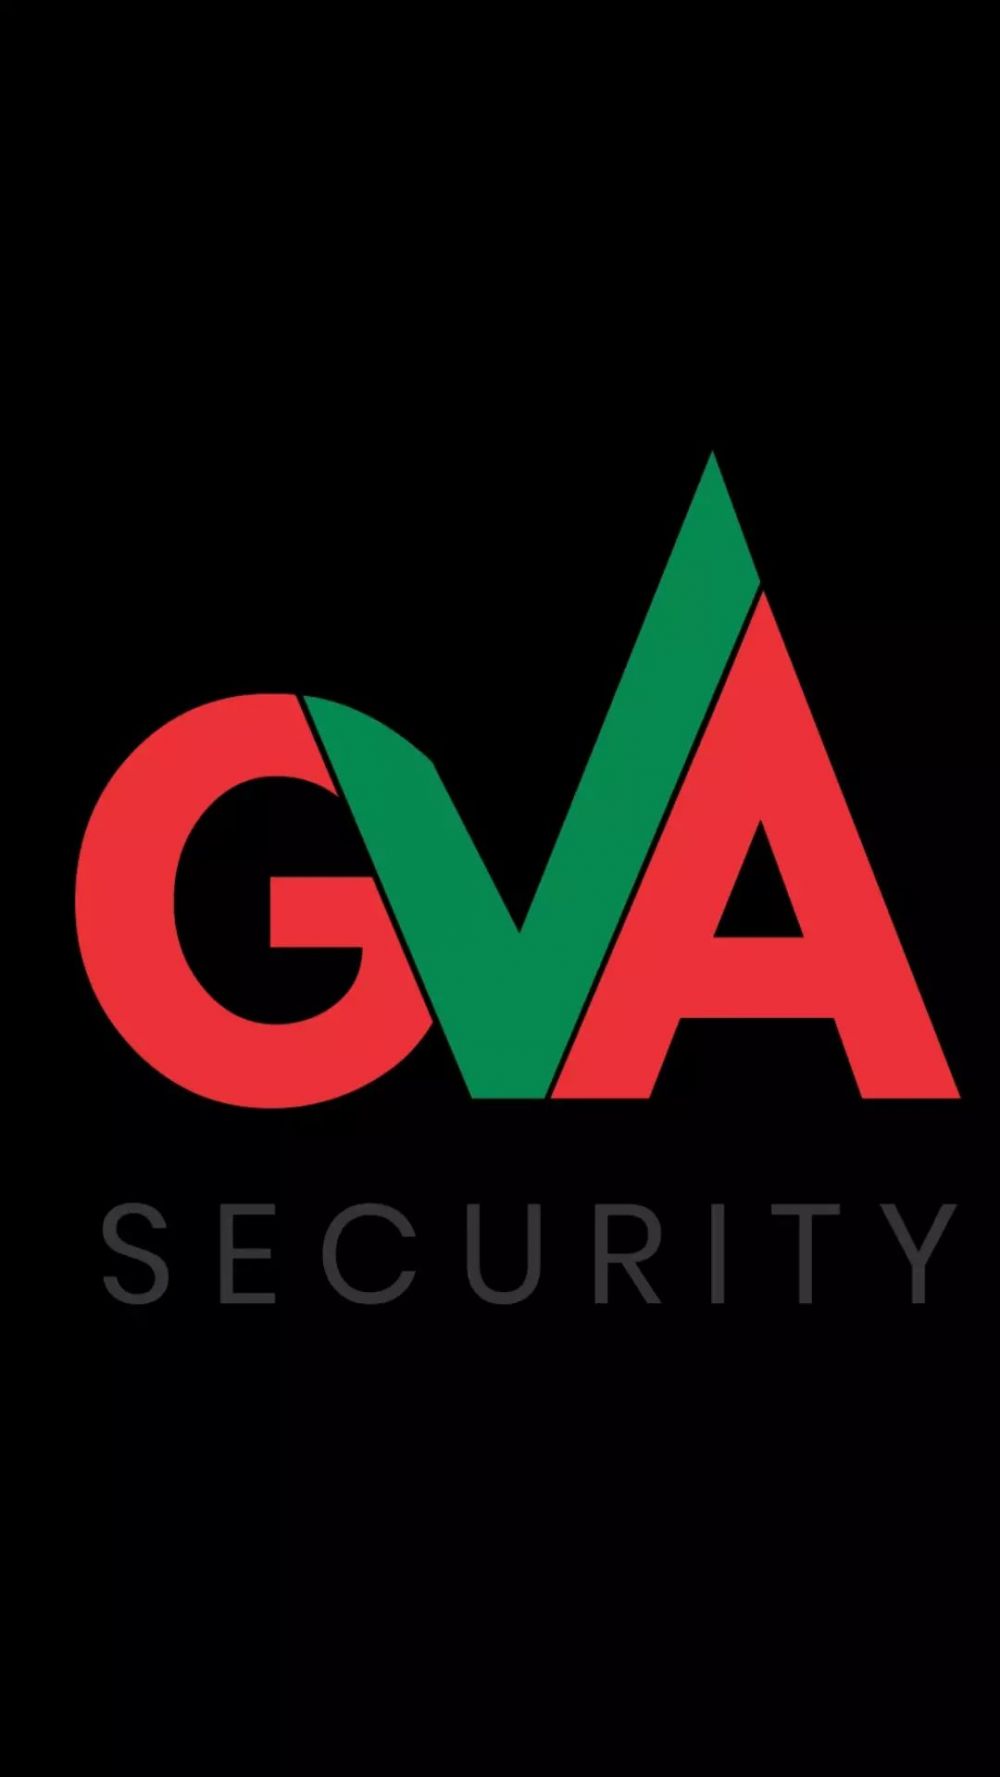 Gva fire security - ES3223